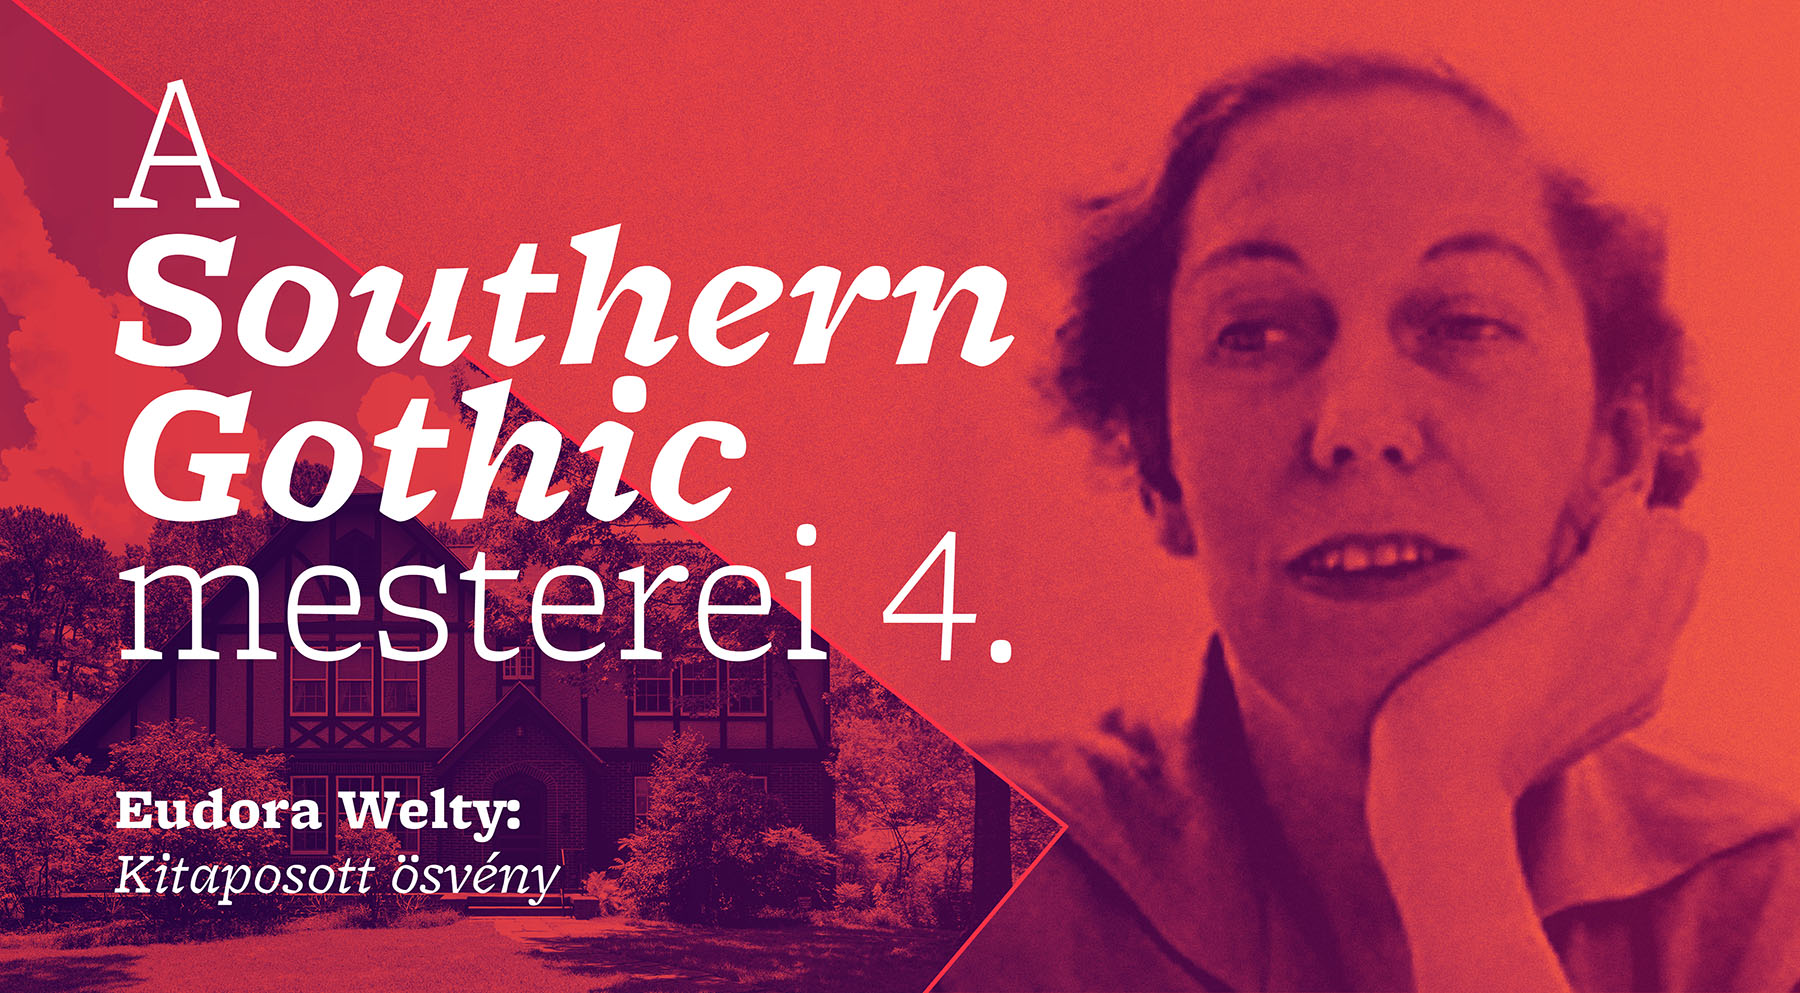 A Southern Gothic mesterei 4. (Eudora Welty: Kitaposott ösvény)